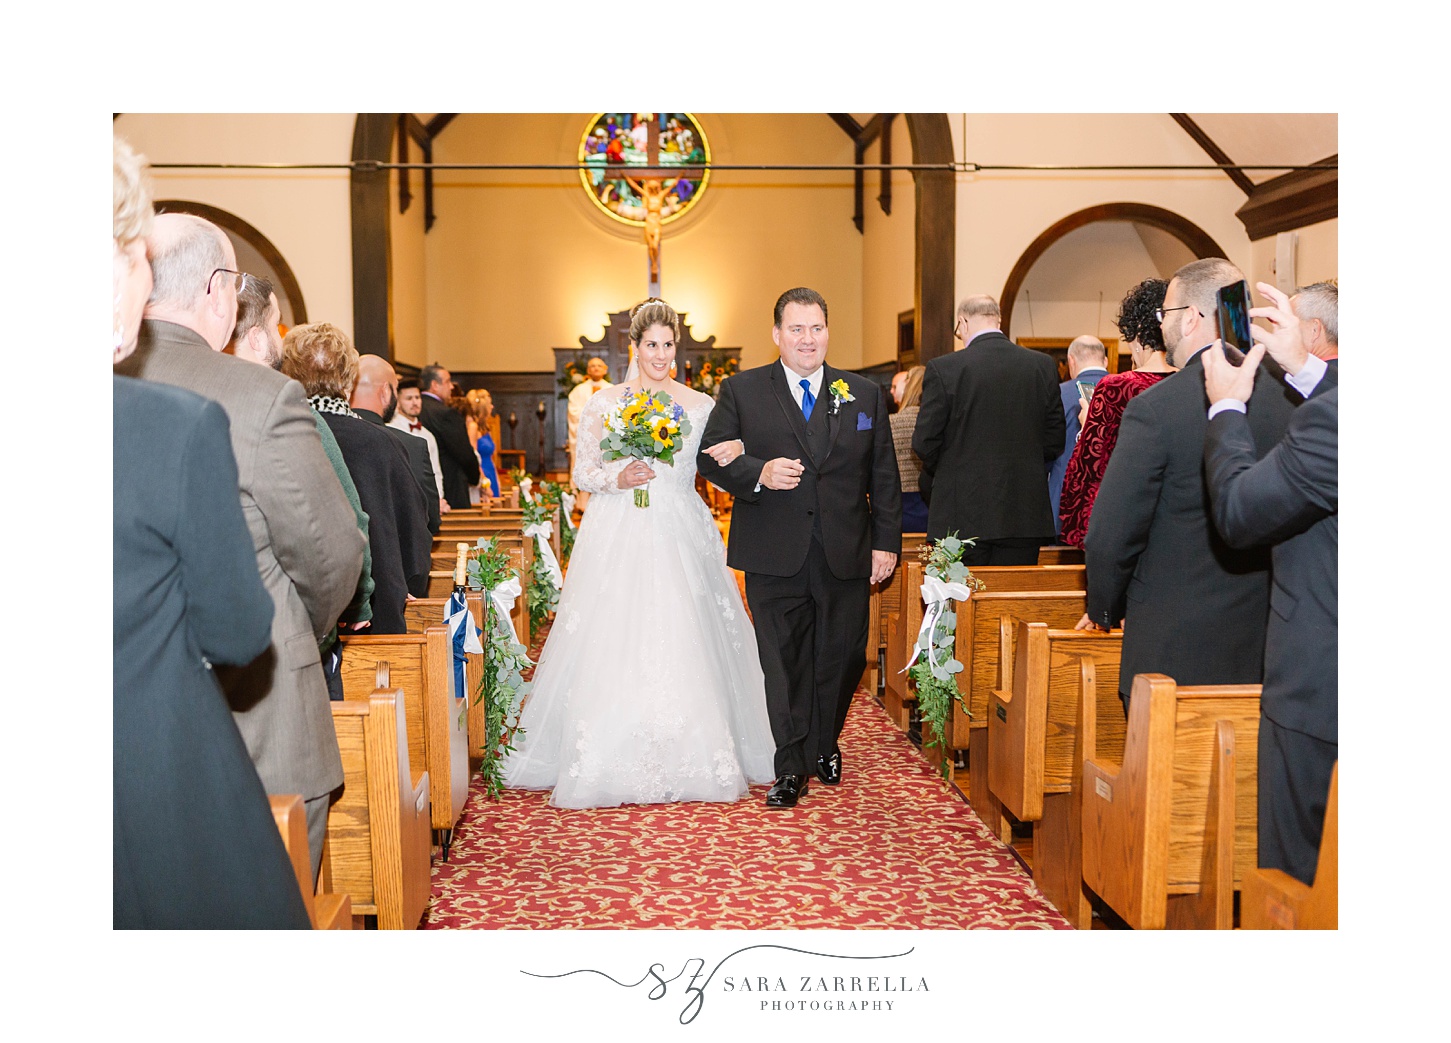 newlyweds walk up aisle after traditional church wedding in Rhode Island